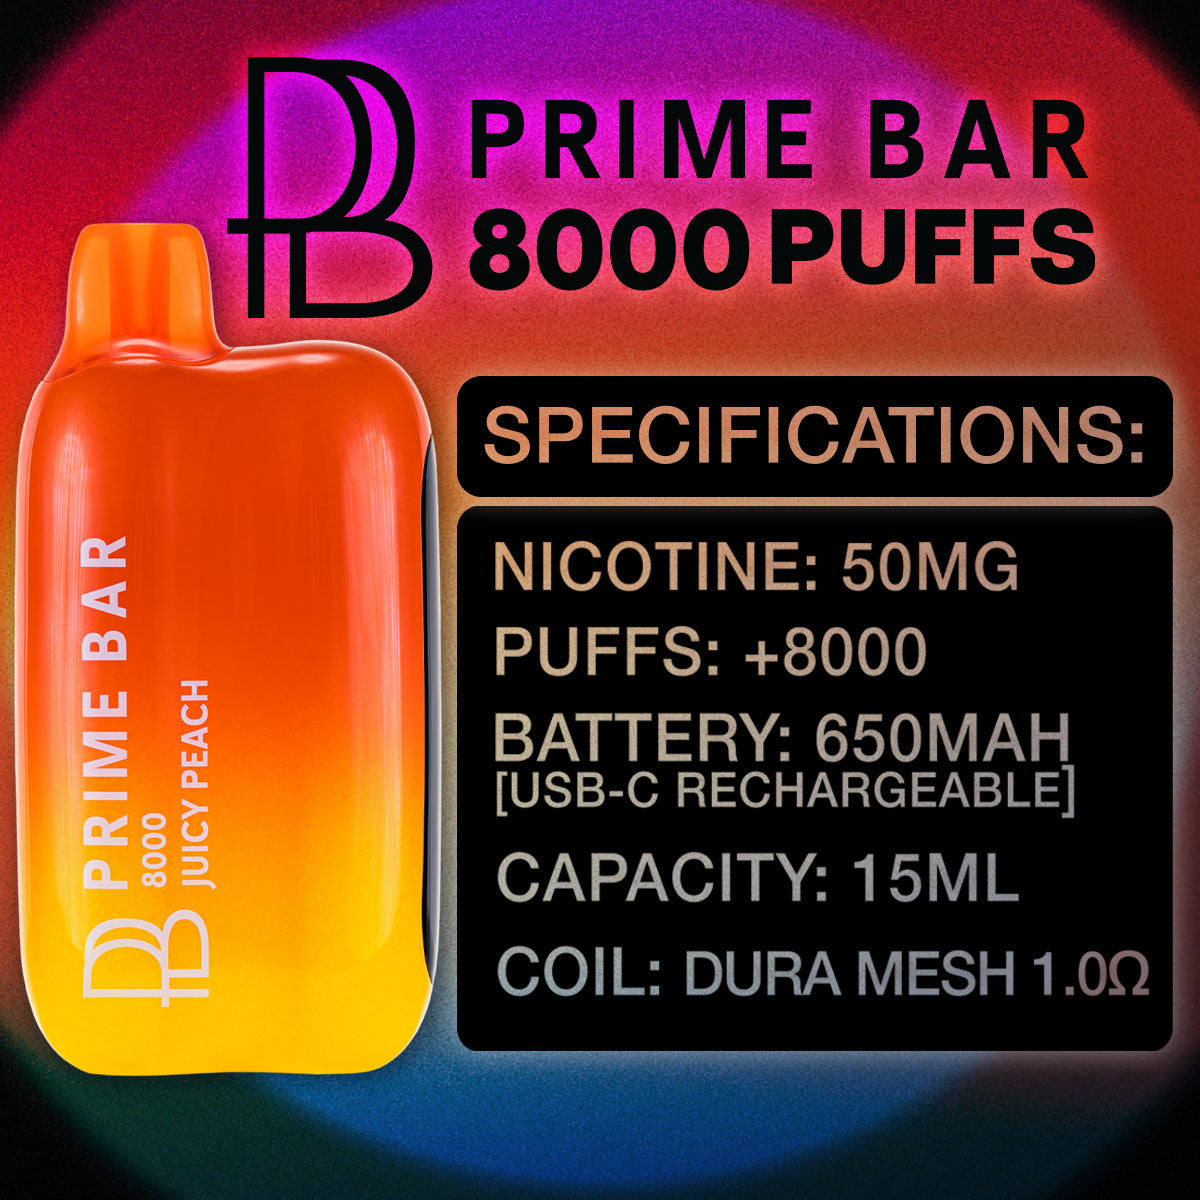 Prime Bar 8000 Specs